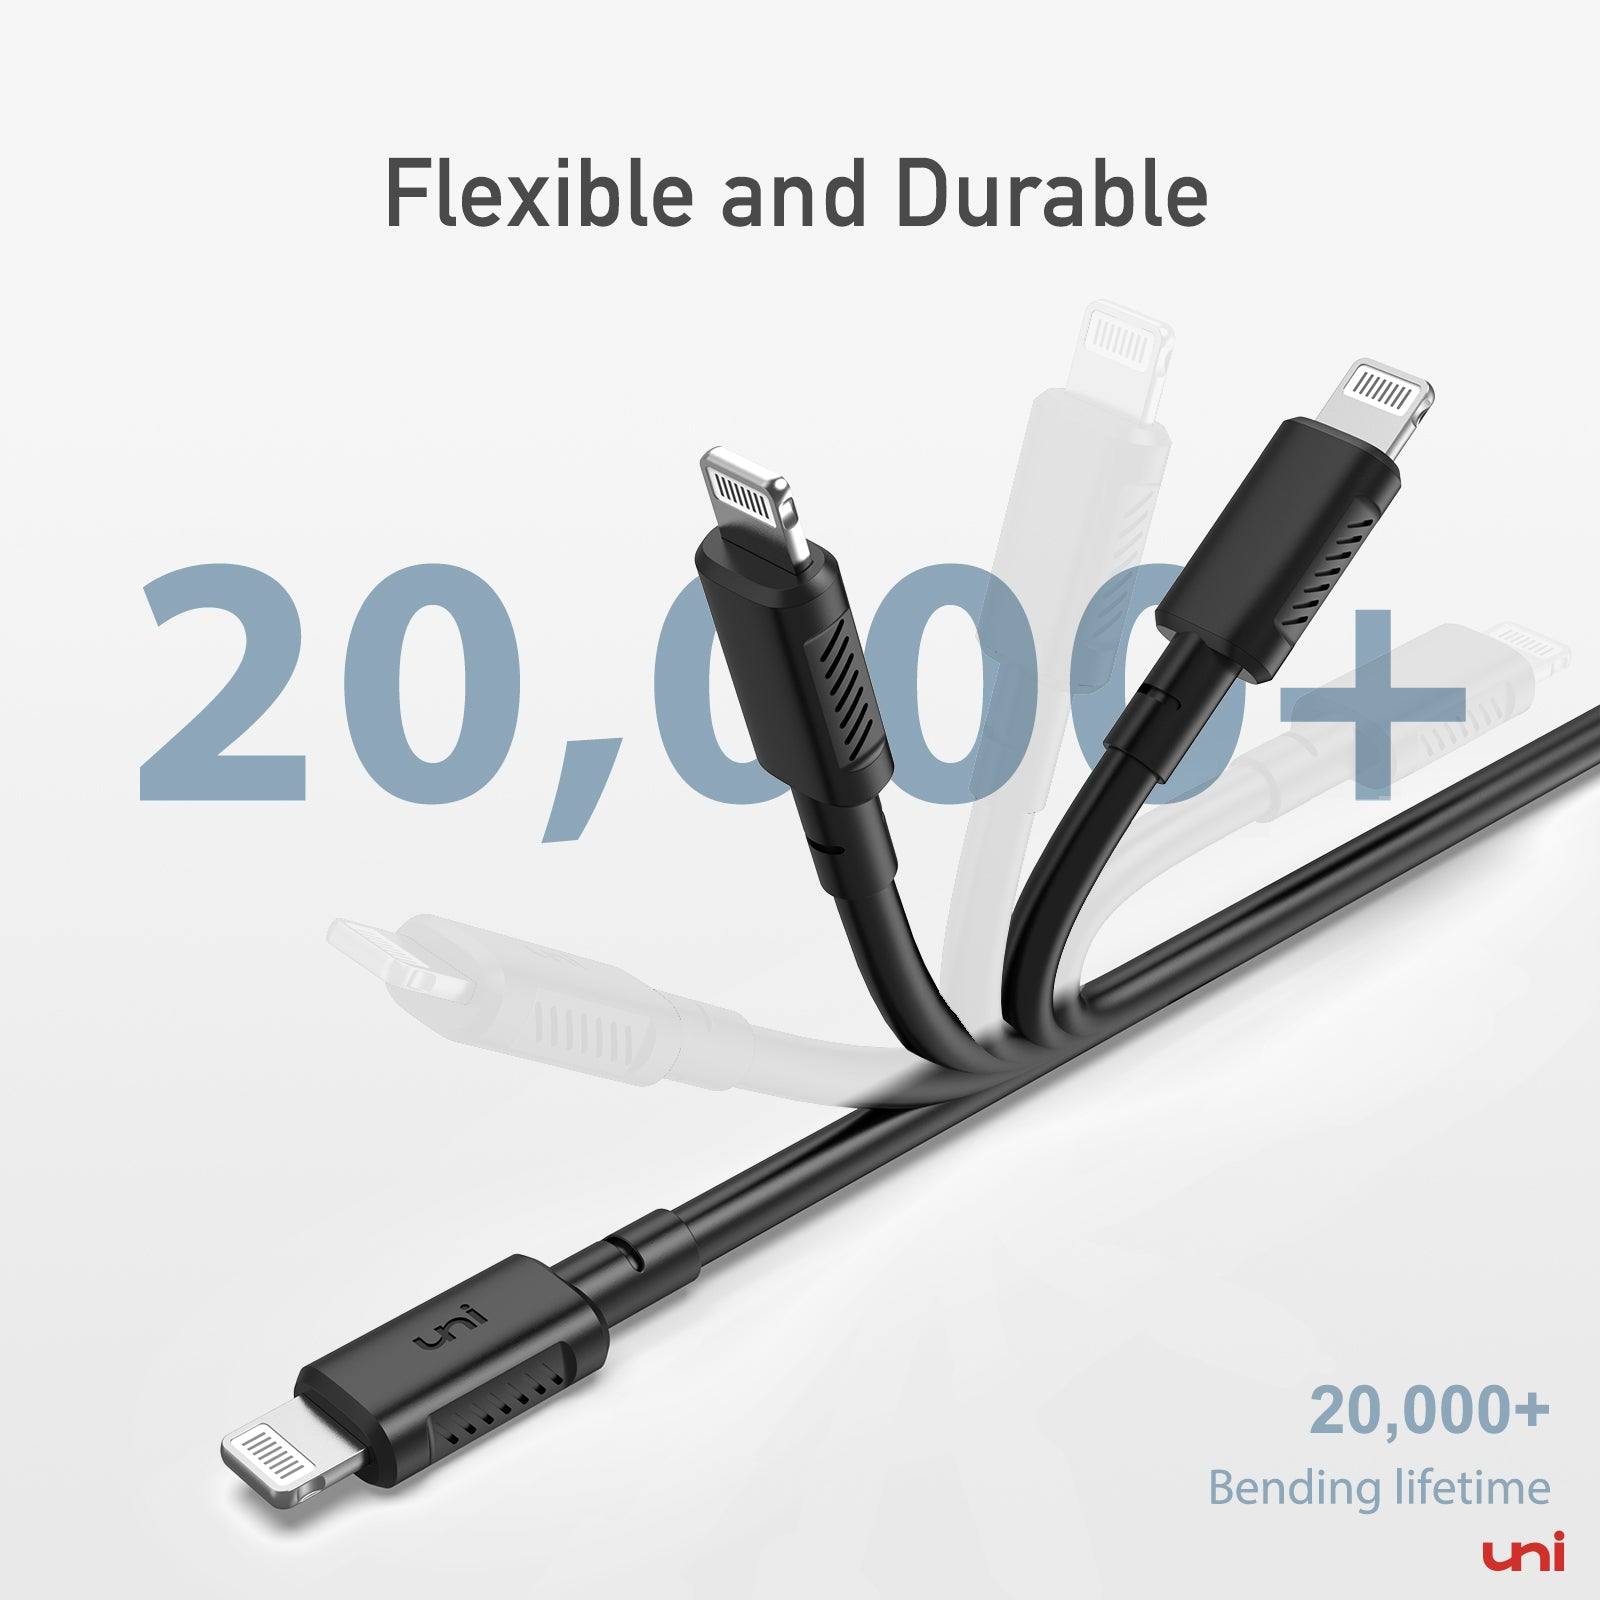 goedkoop mooi zo Bourgondië uni® Lightning Fast Charging Cable, Apple iPhone Full Speed USB C Charging  Cable